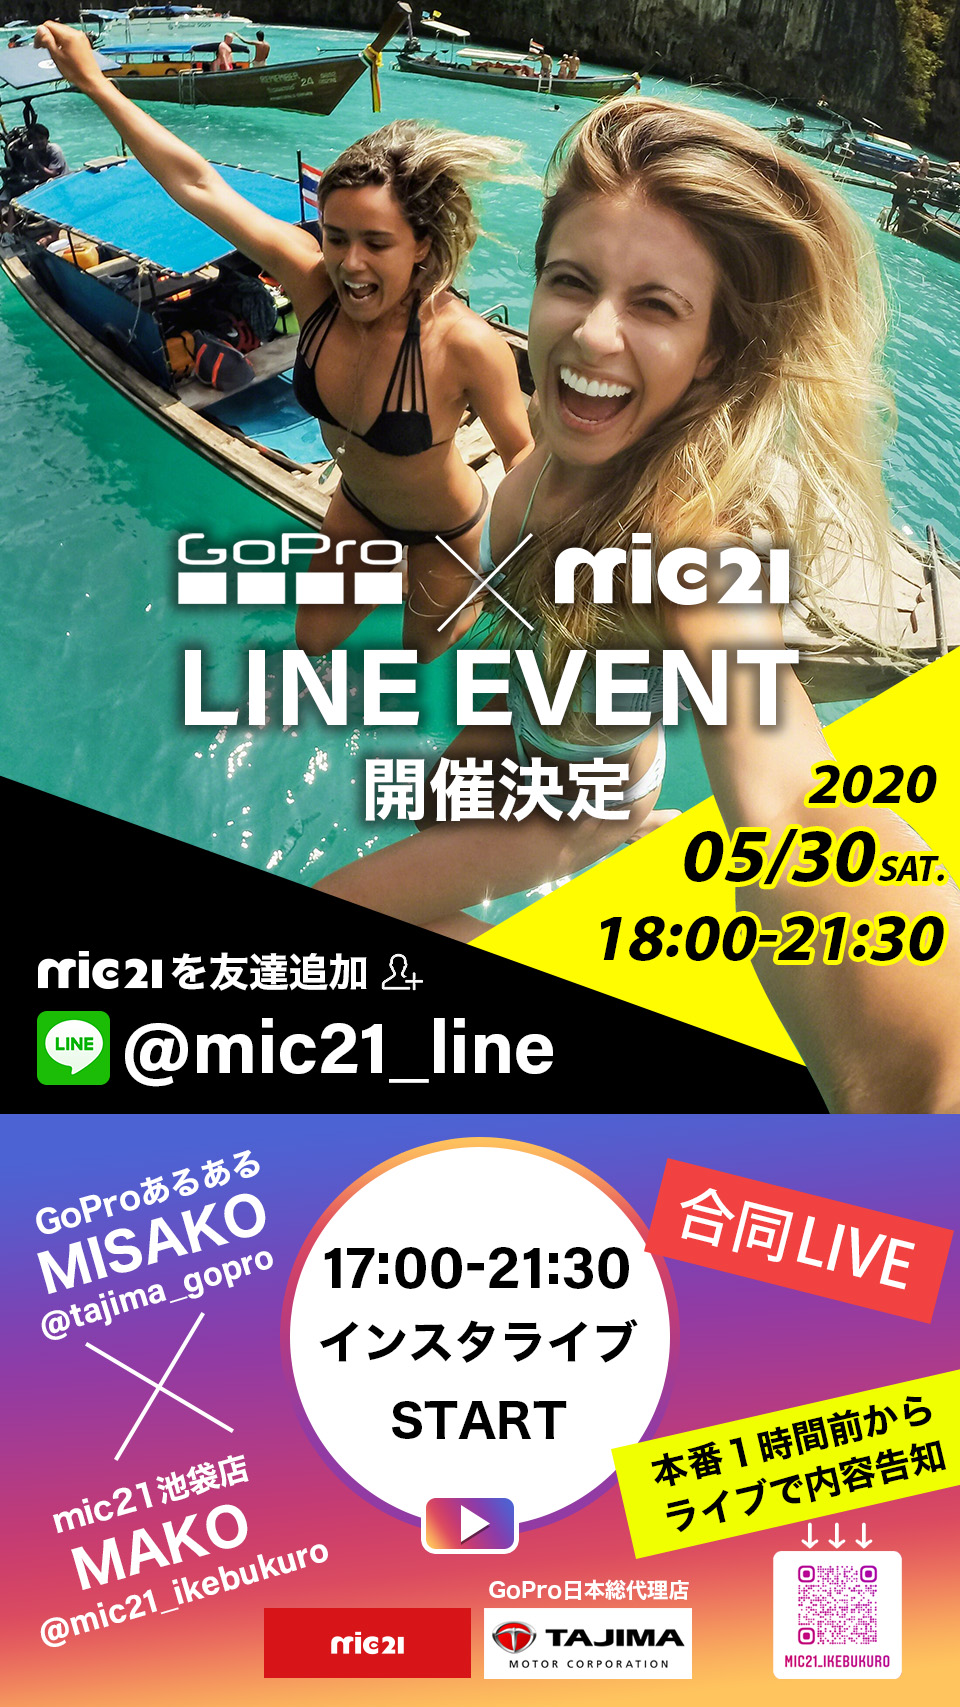 GoPro×mic21 LINE EVENT